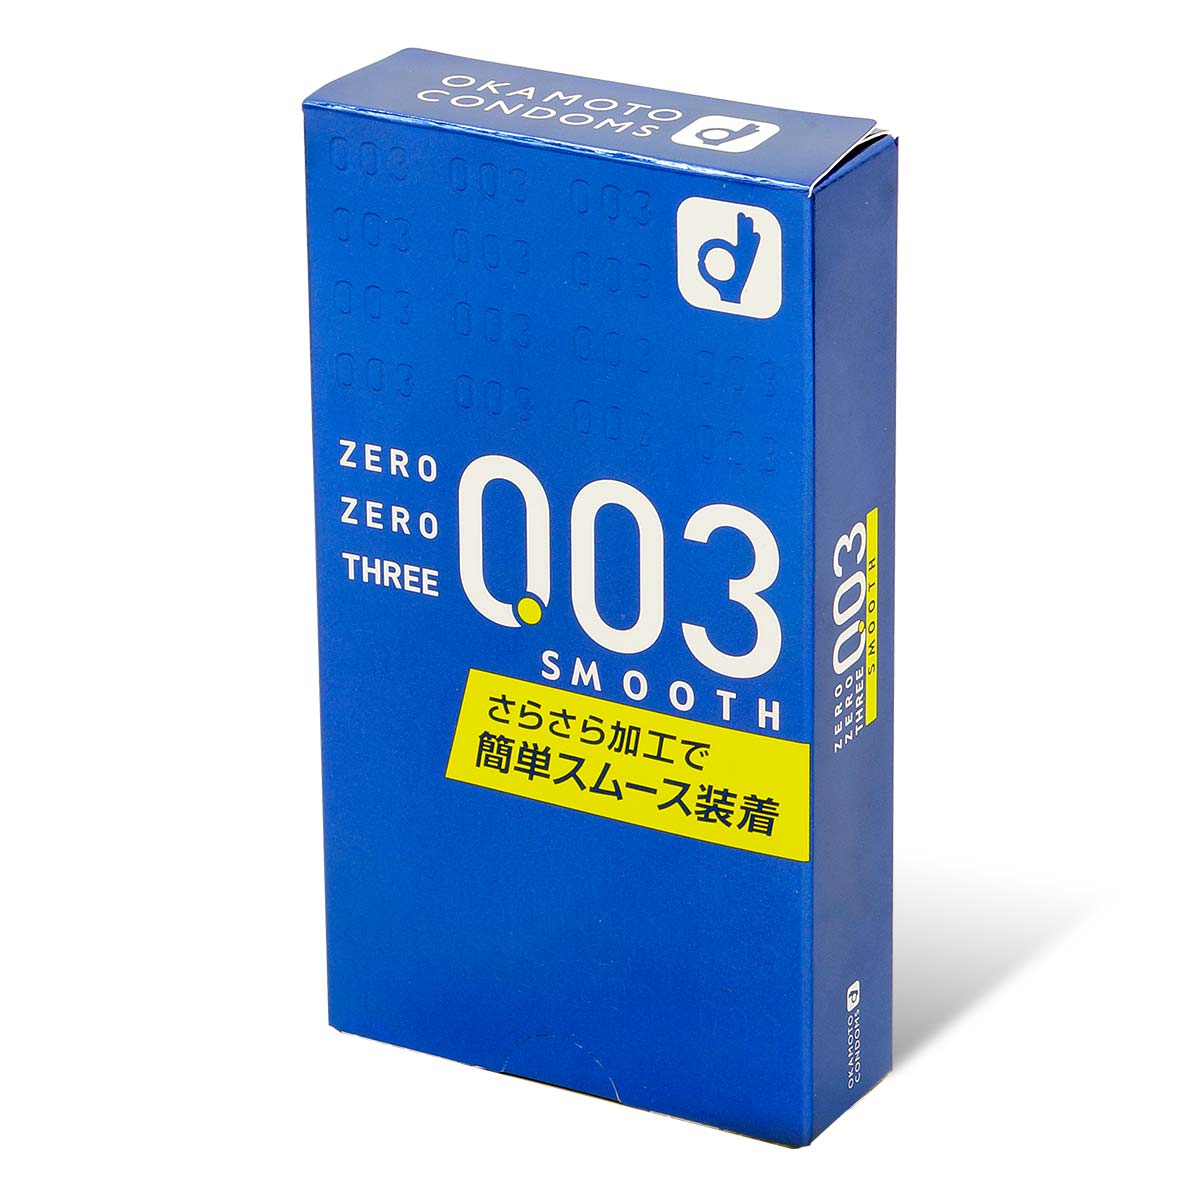 Zero Zero Three 0.03 Smooth (Japan Edition) 10's Pack Latex Condom-p_1